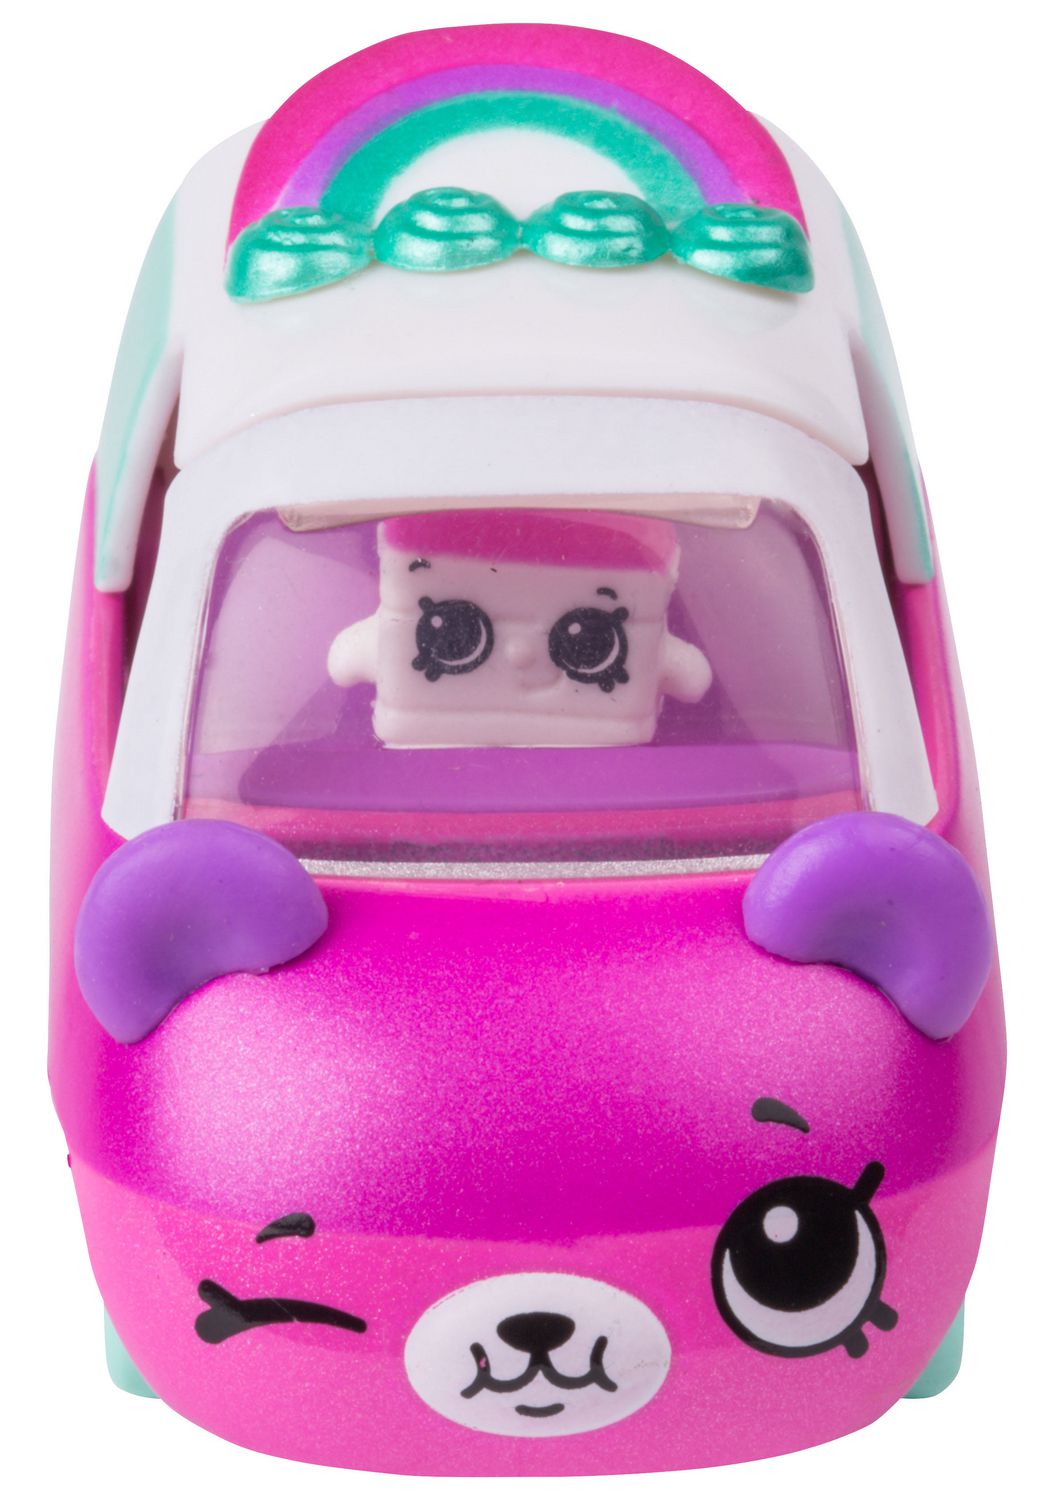 Shopkins Cutie Cars Yo Go-Cart Purple Pink